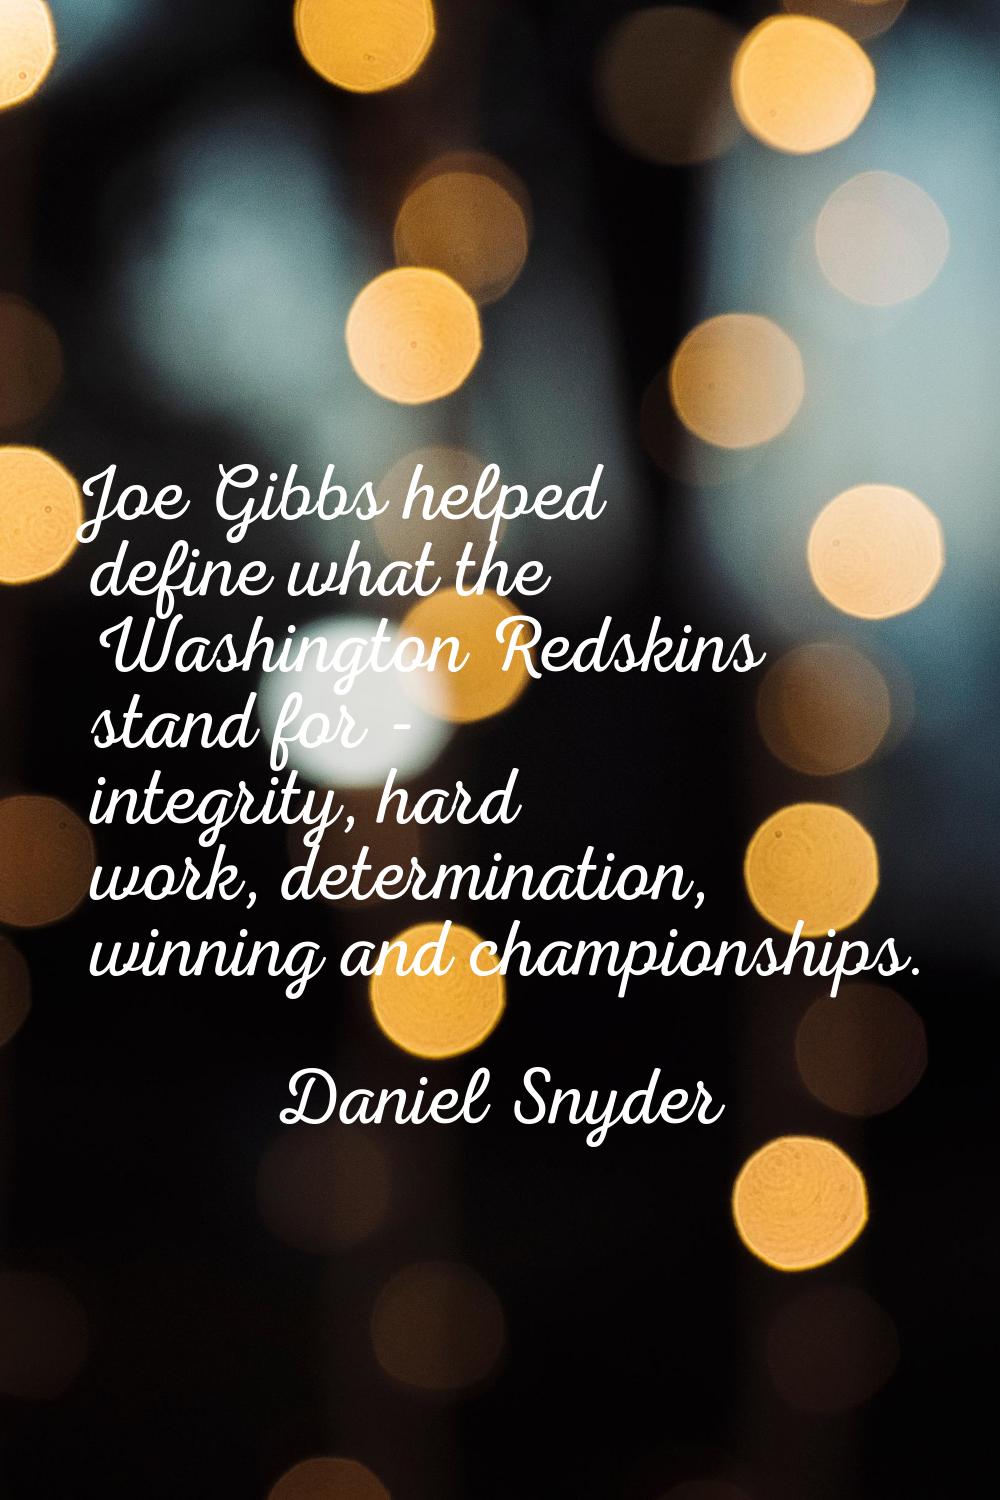 Joe Gibbs helped define what the Washington Redskins stand for - integrity, hard work, determinatio